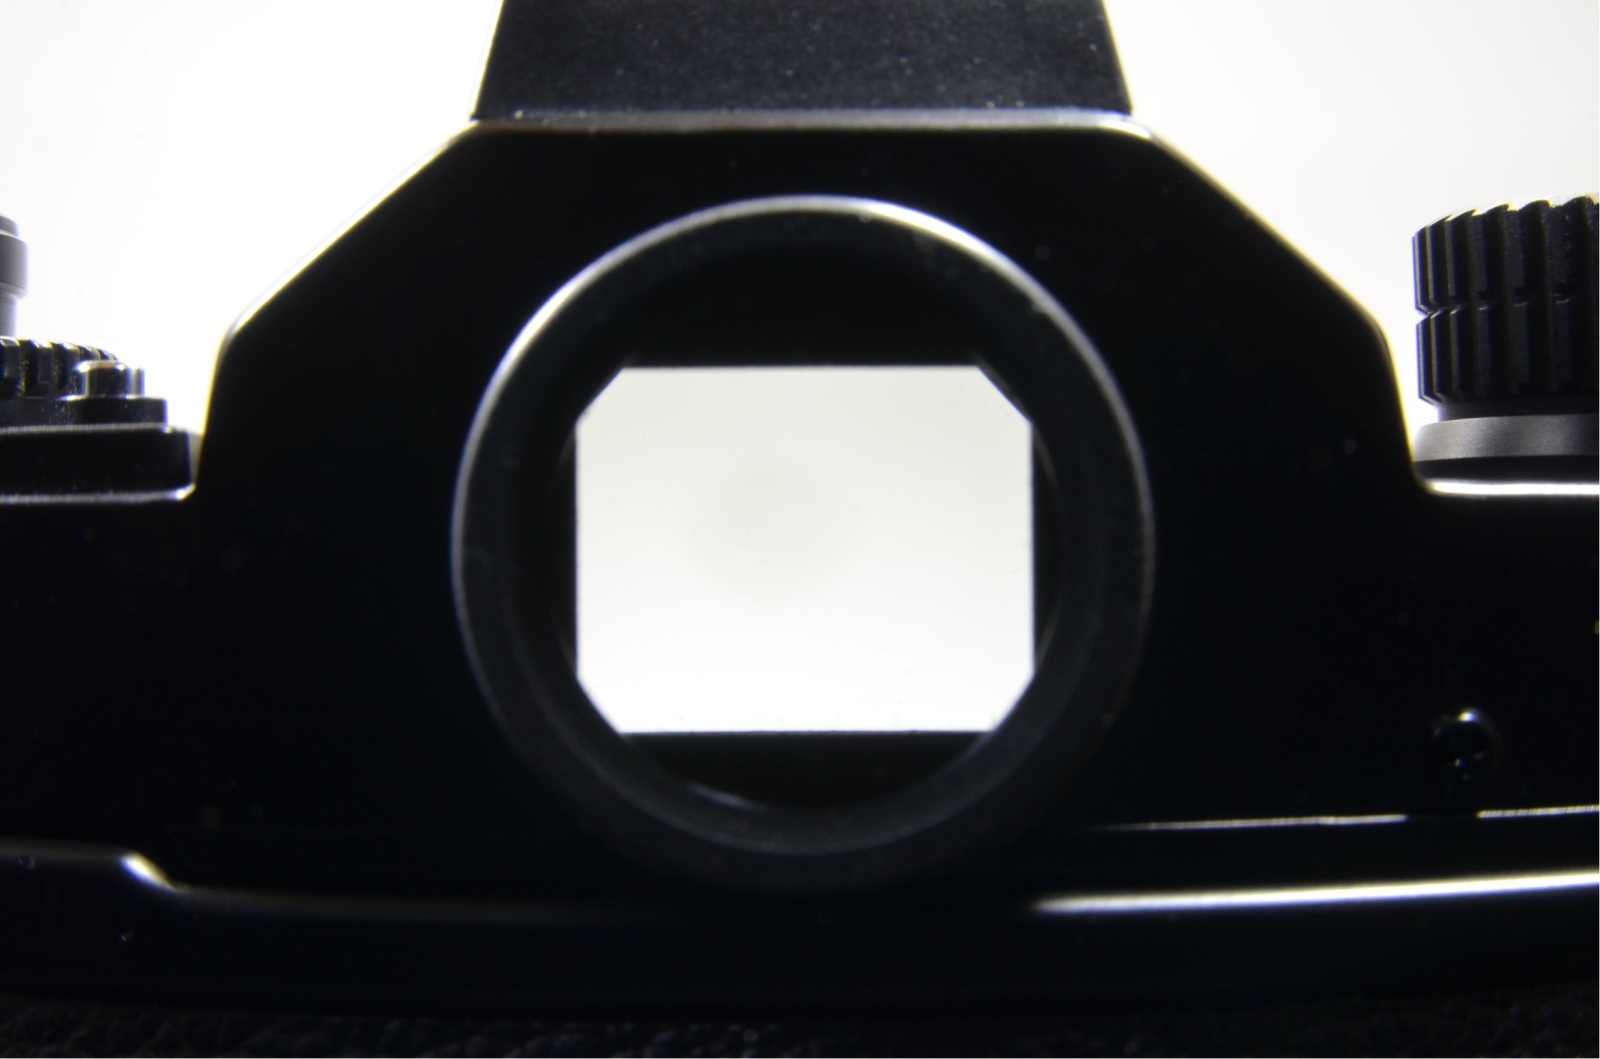 nikon fm3a 35mm film camera black with e3 focusing screen shooting tested